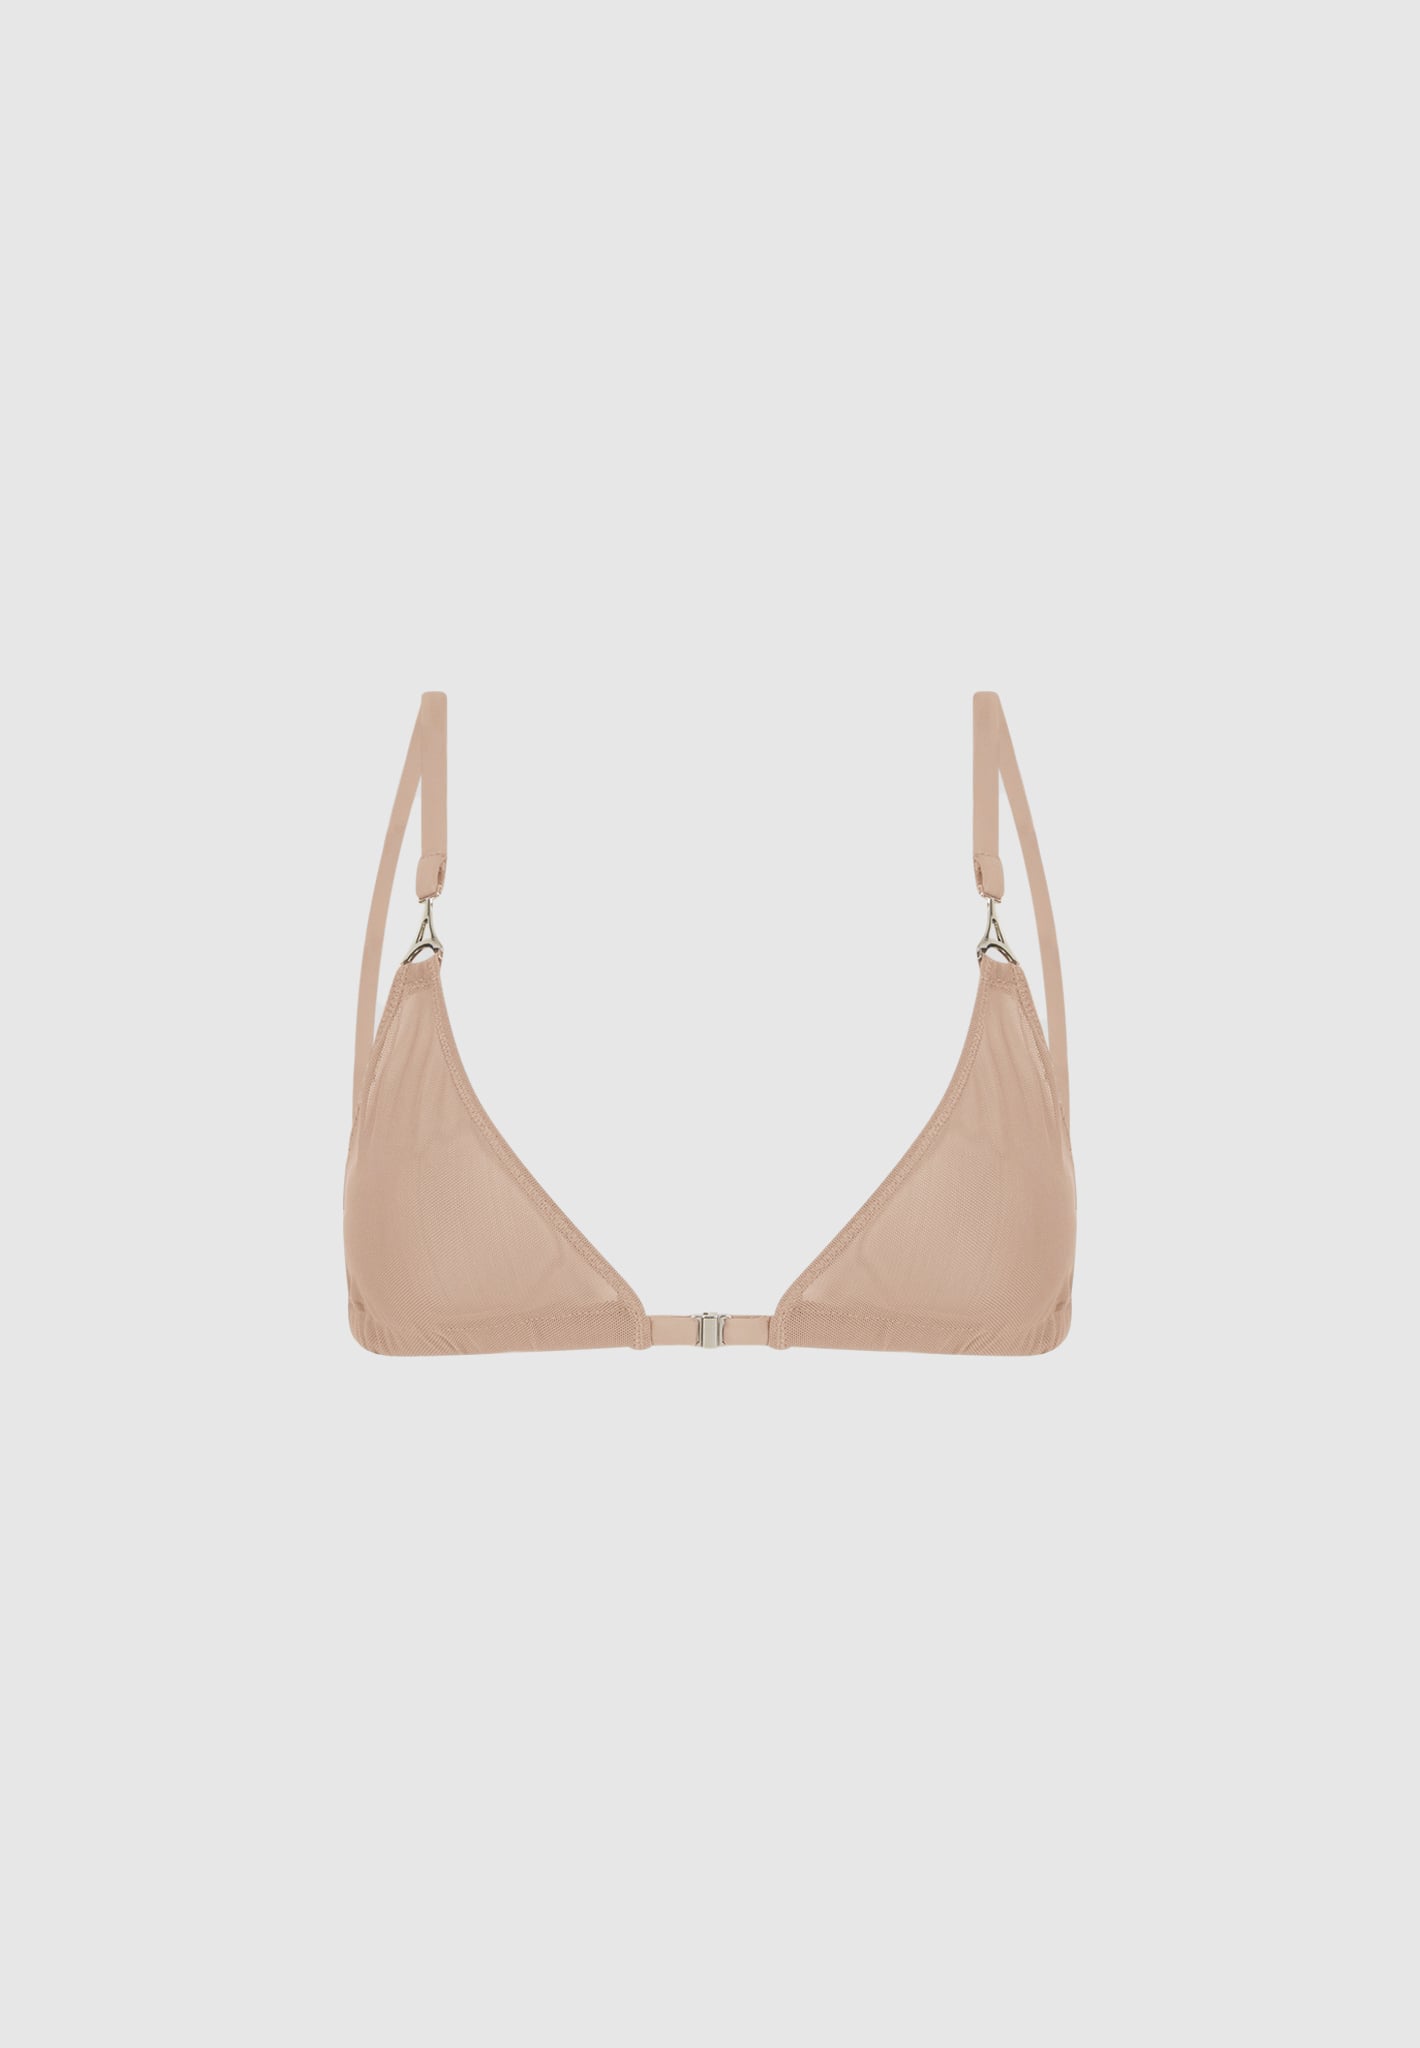 Buy Rhinestone-embellished soft bra online in Kuwait